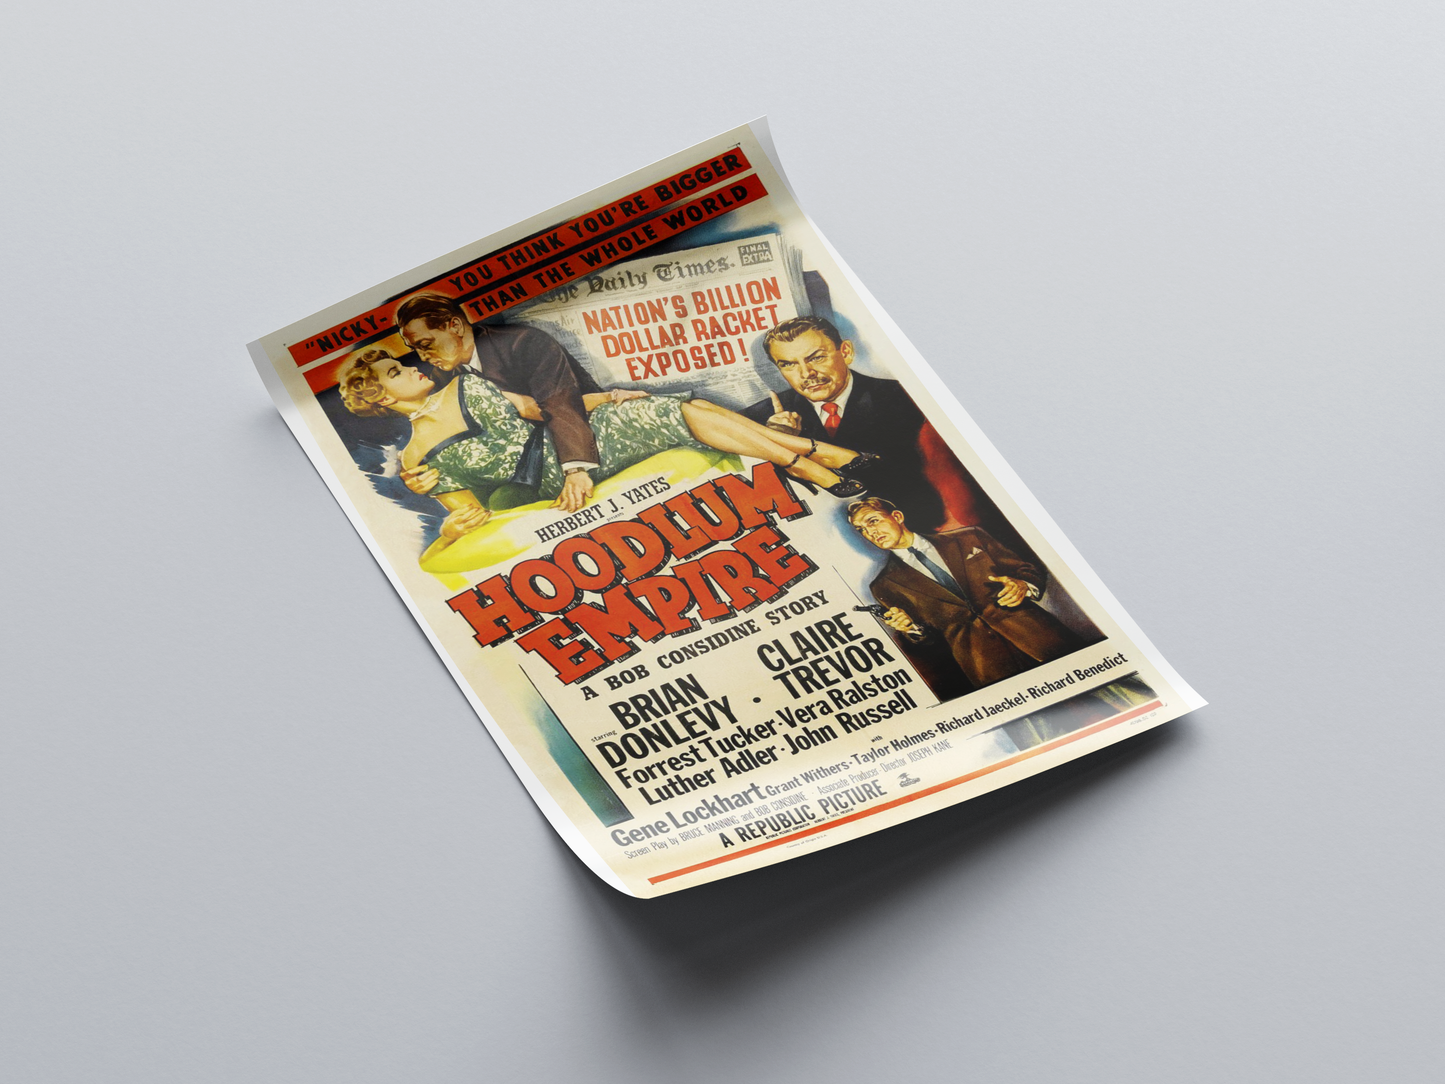 Hoodlum Empire (1952) Movie Poster displayed in interior setting